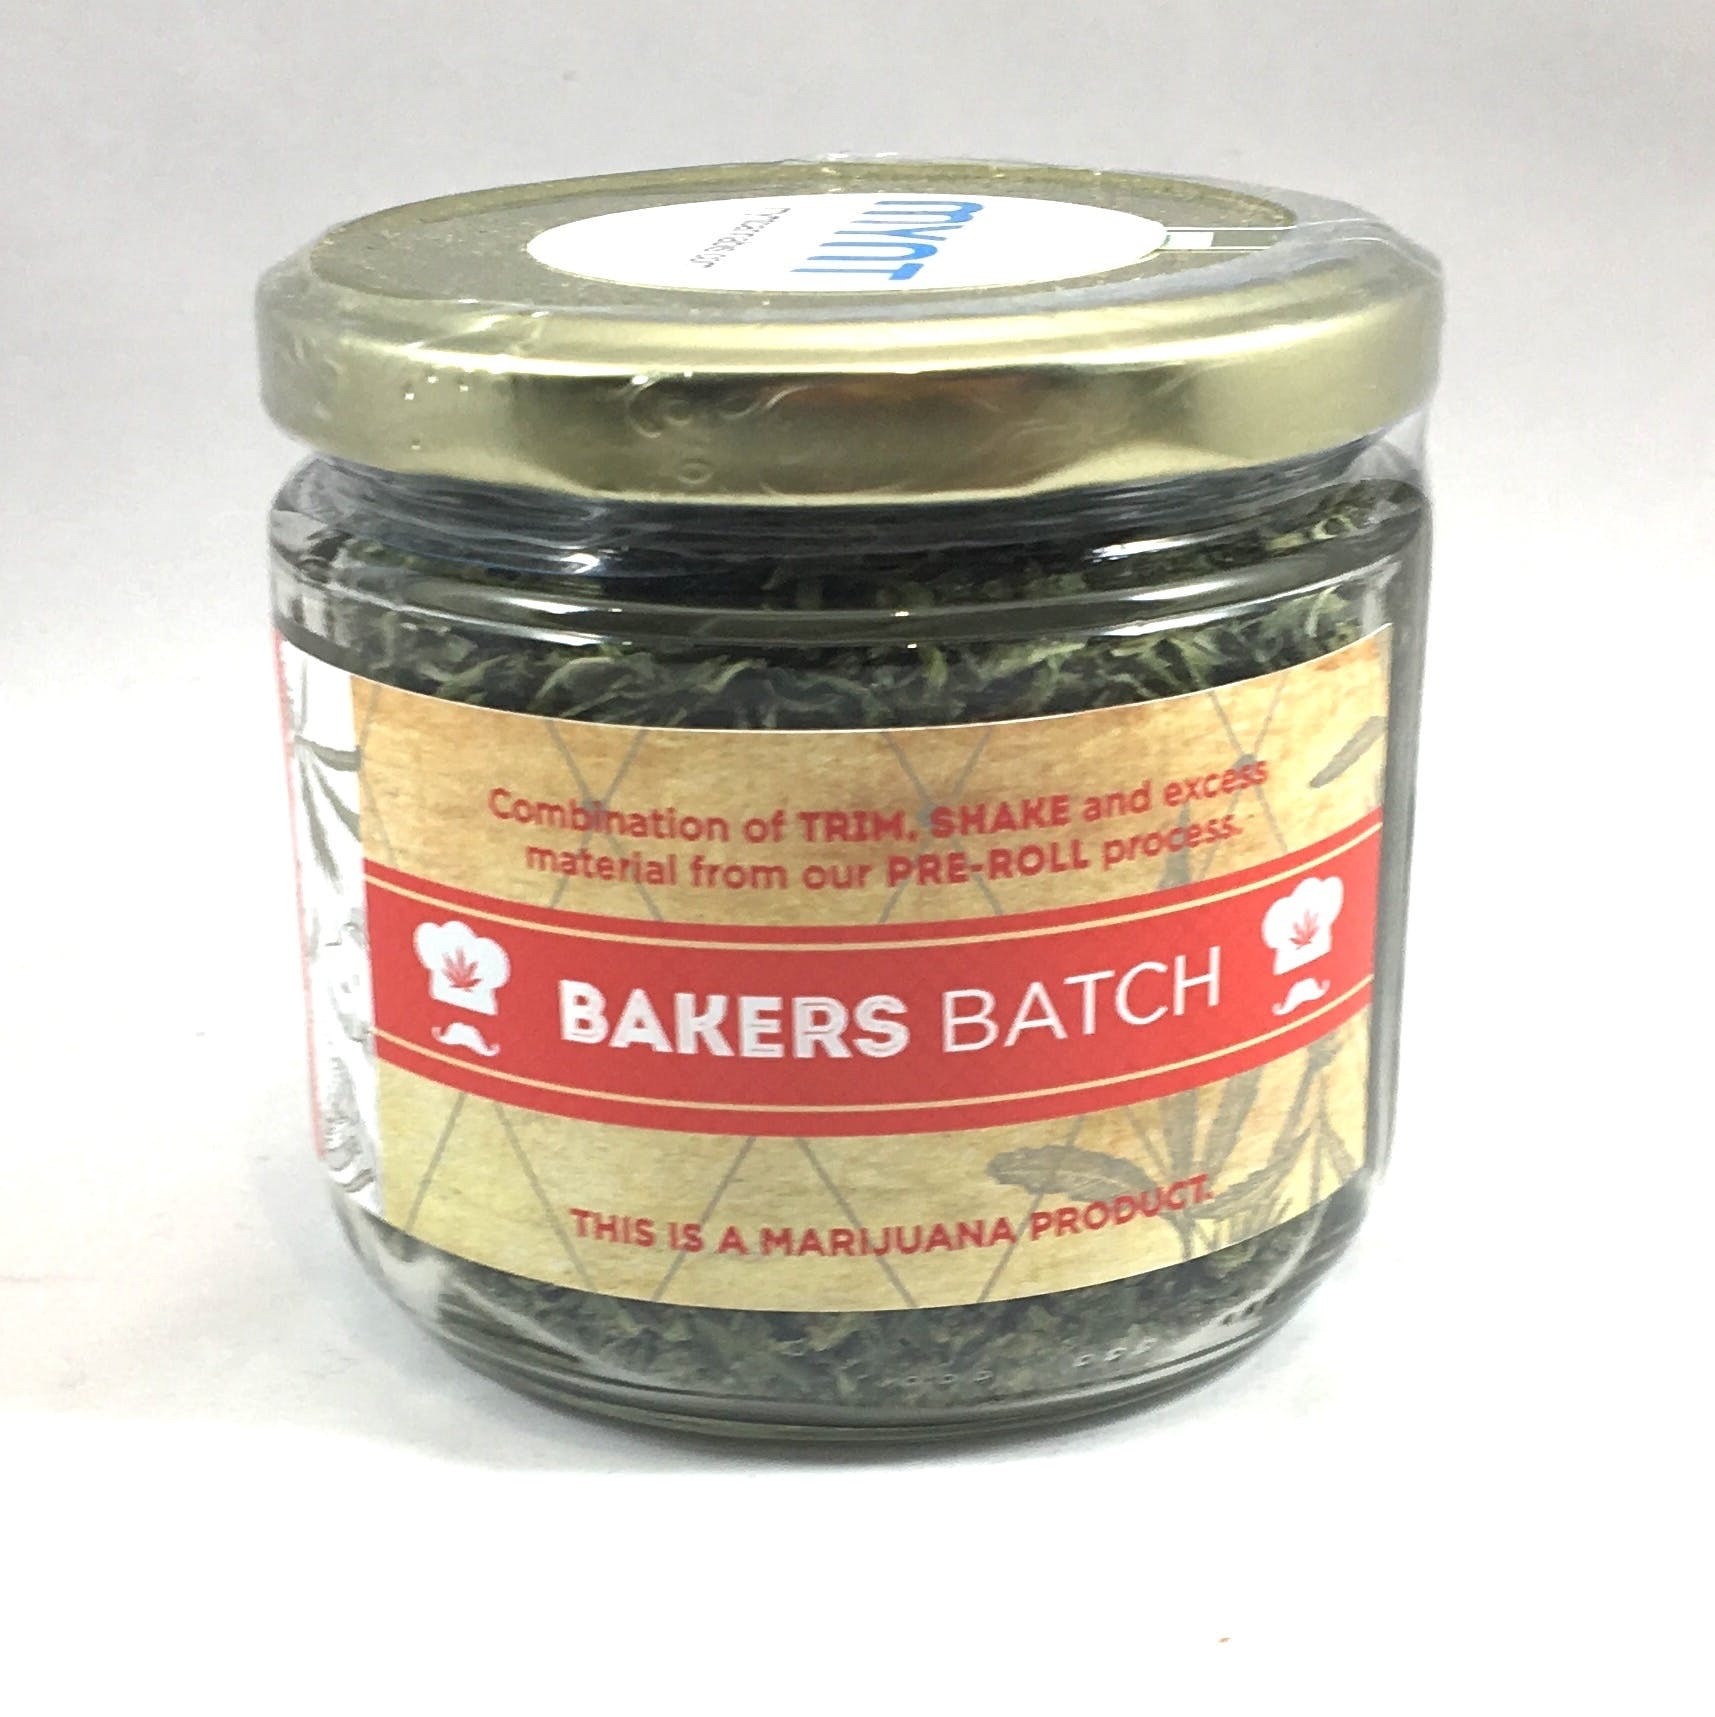 Glue on Fire Baker's Batch (GLP)